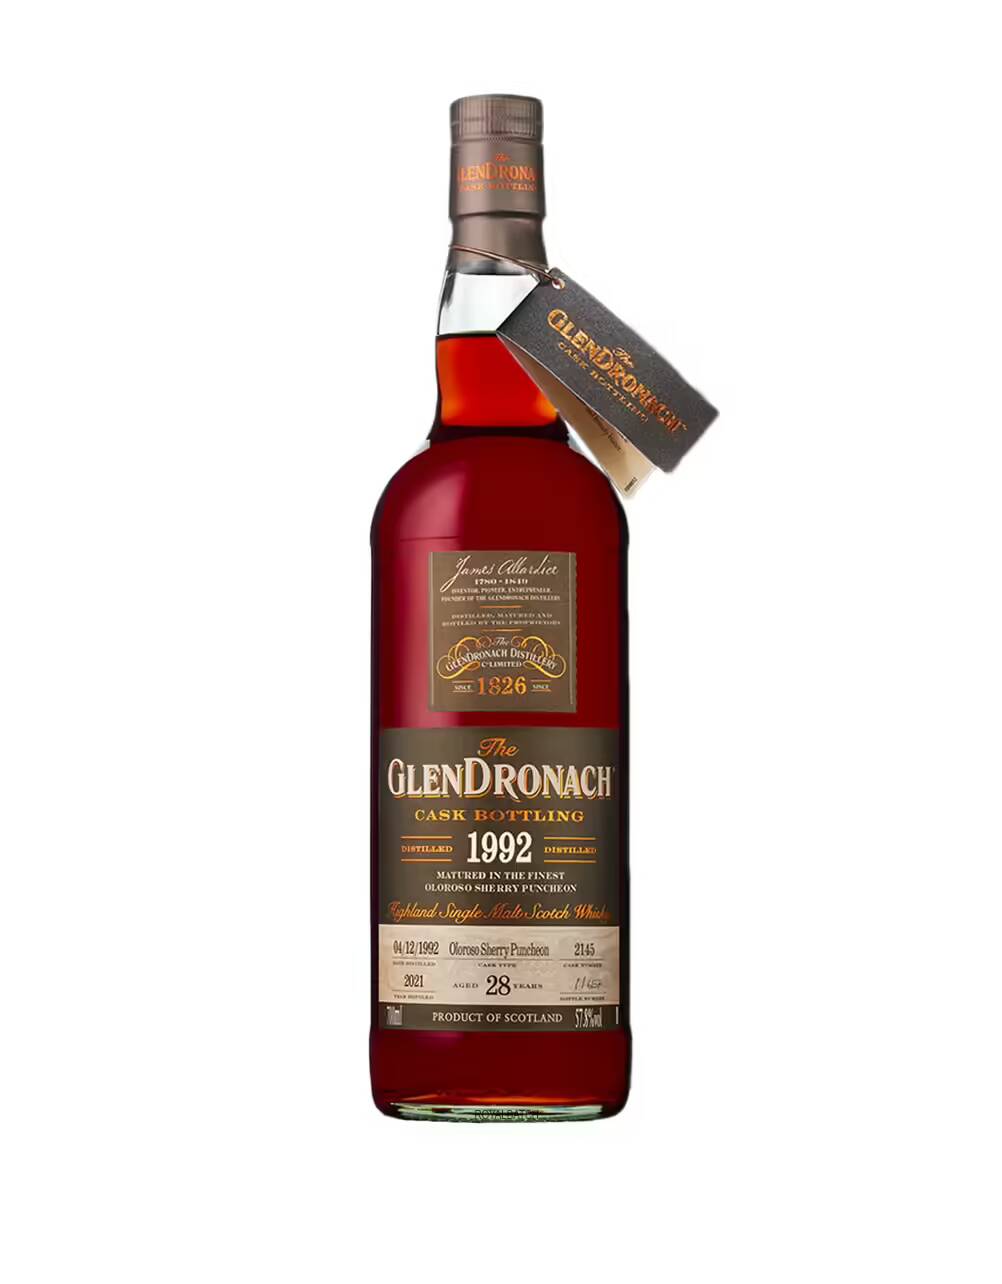 The Glendronach Cask Bottling 28 Year Old 1992 Scotch Whisky